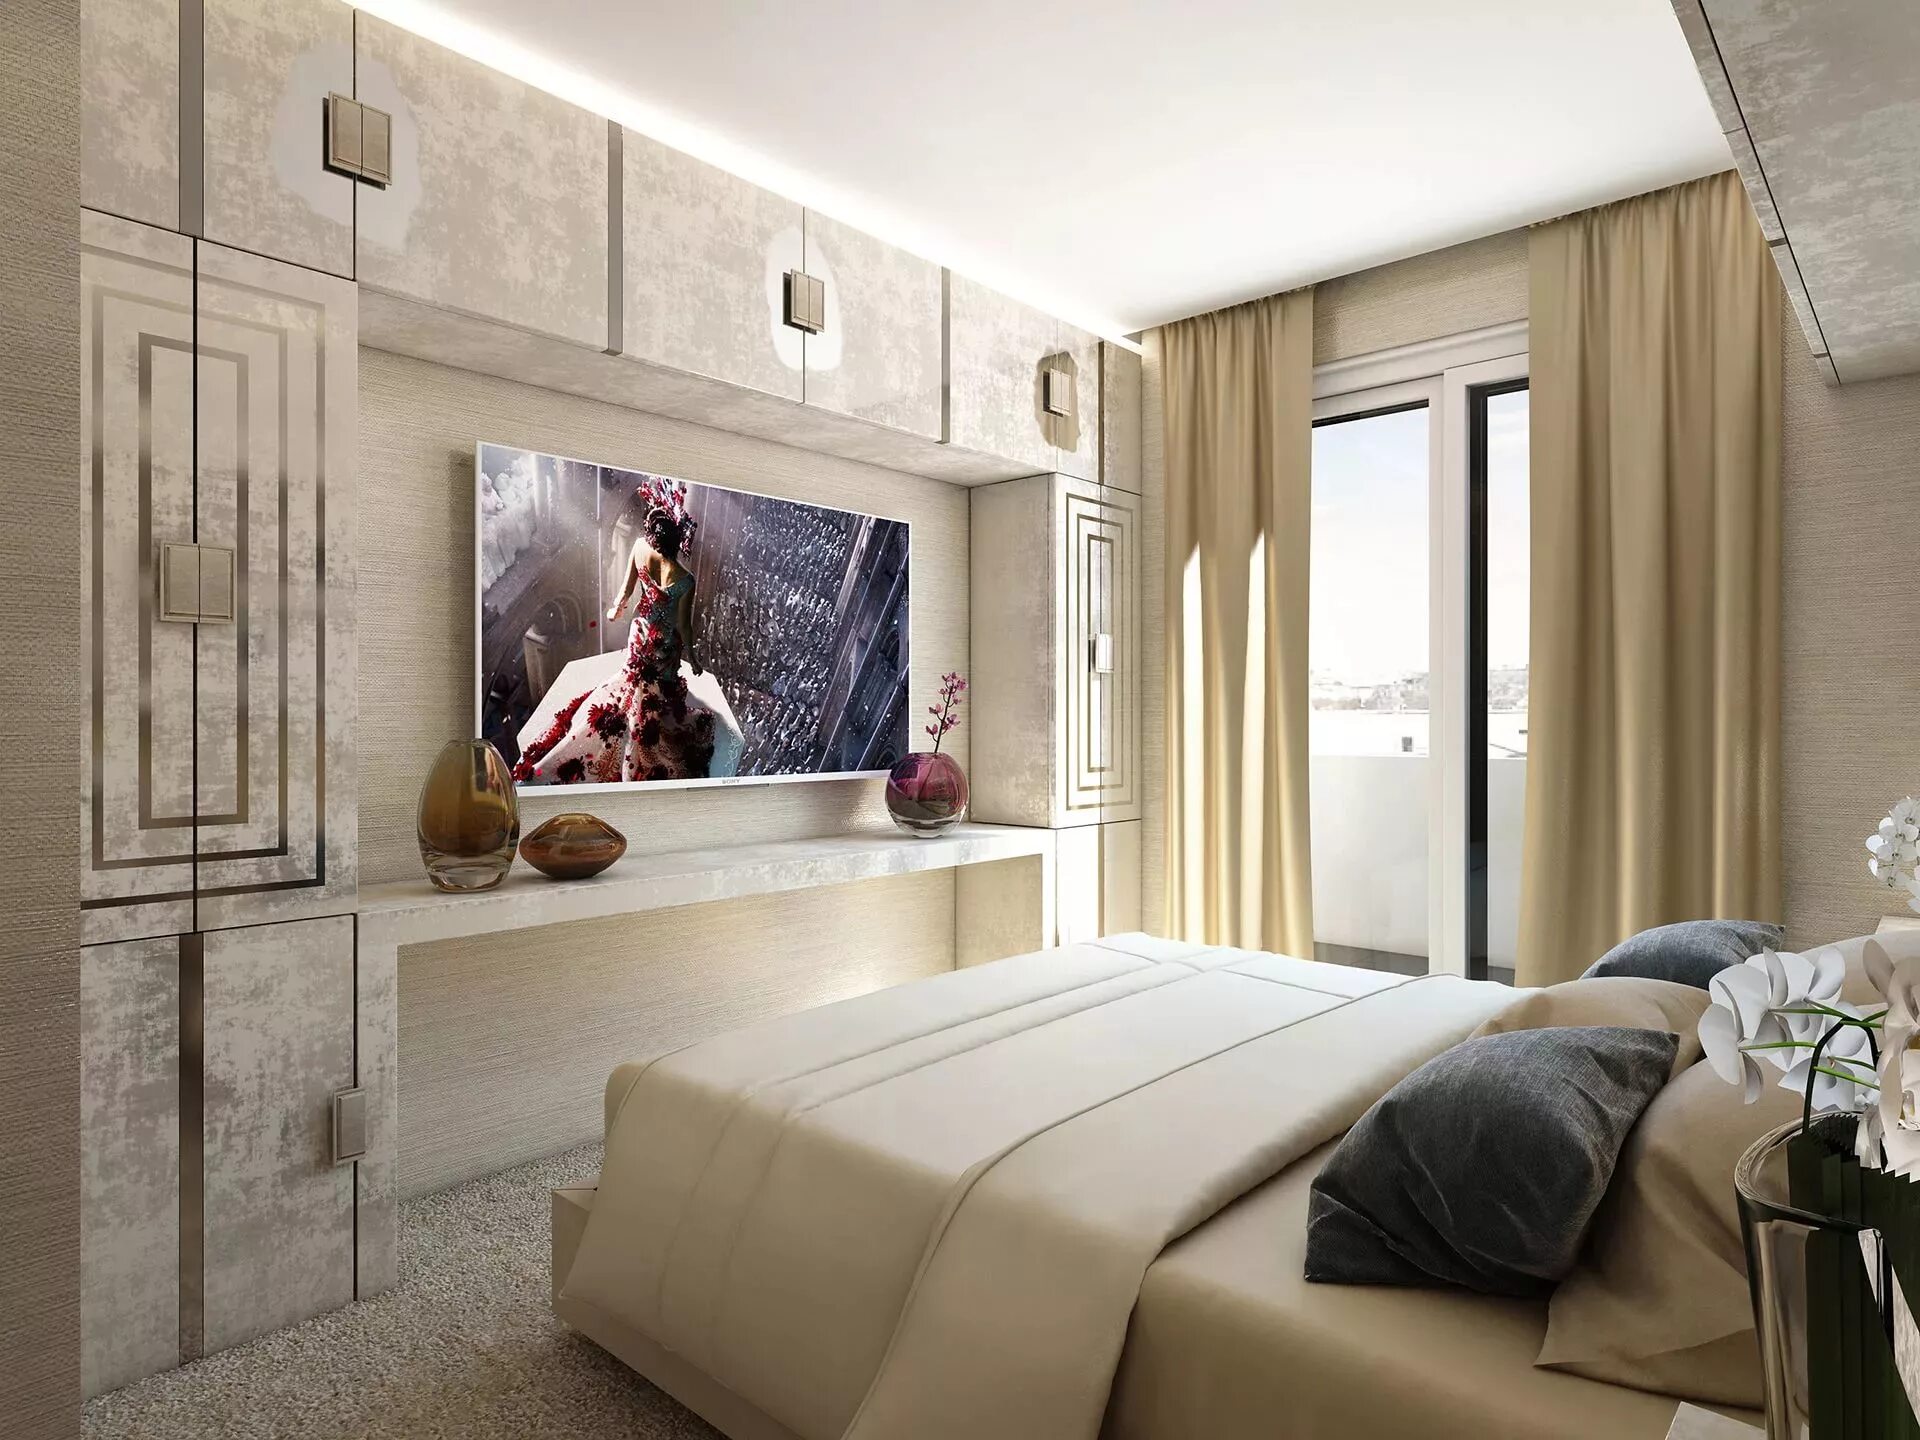 В спальне перед телевизором. Телевизор в спальне. Интерьер спальни с телевизором. Телевизор в спальне на стене. Уютная спальня с телевизором.